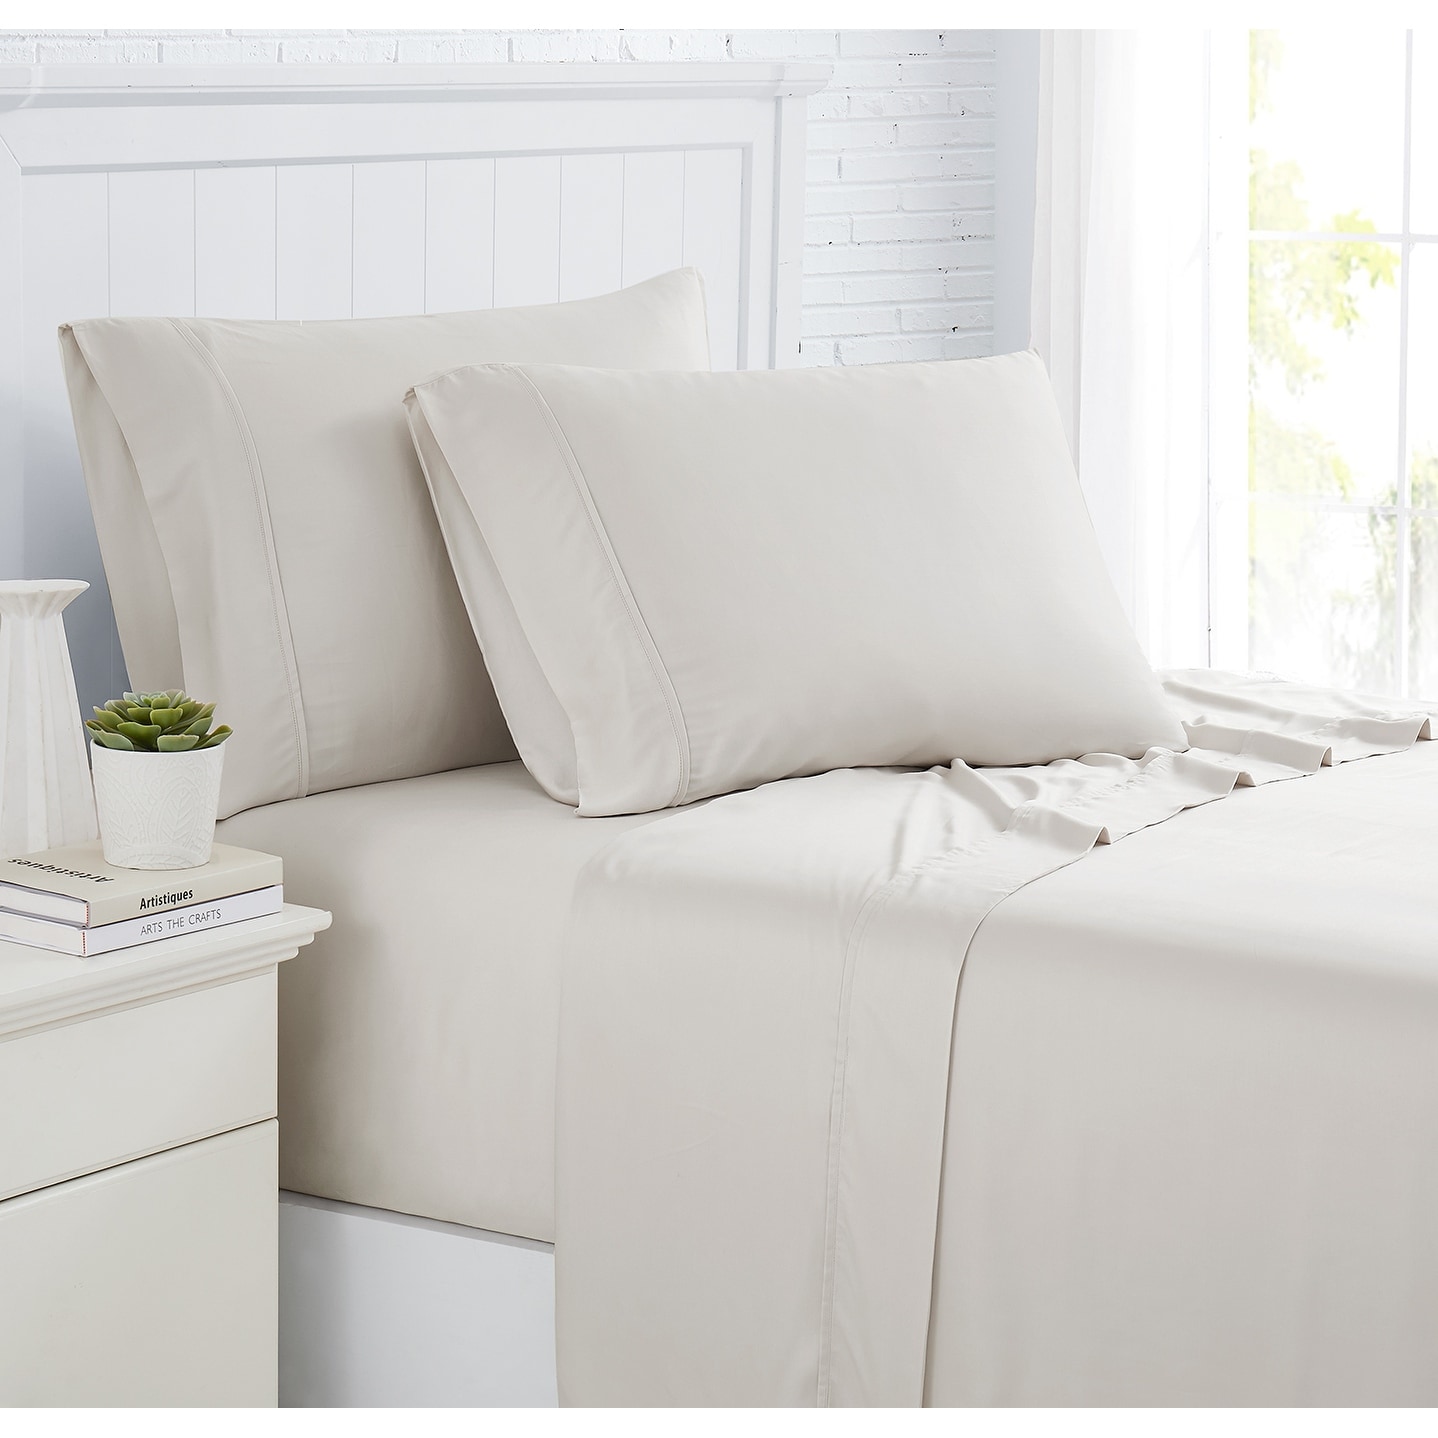 100% Bamboo Viscose Bed Sheet Set, Cooling Deep Pocket Bed Sheets-ultra  Soft & Breathable 4 Piece Set, emerald Green 